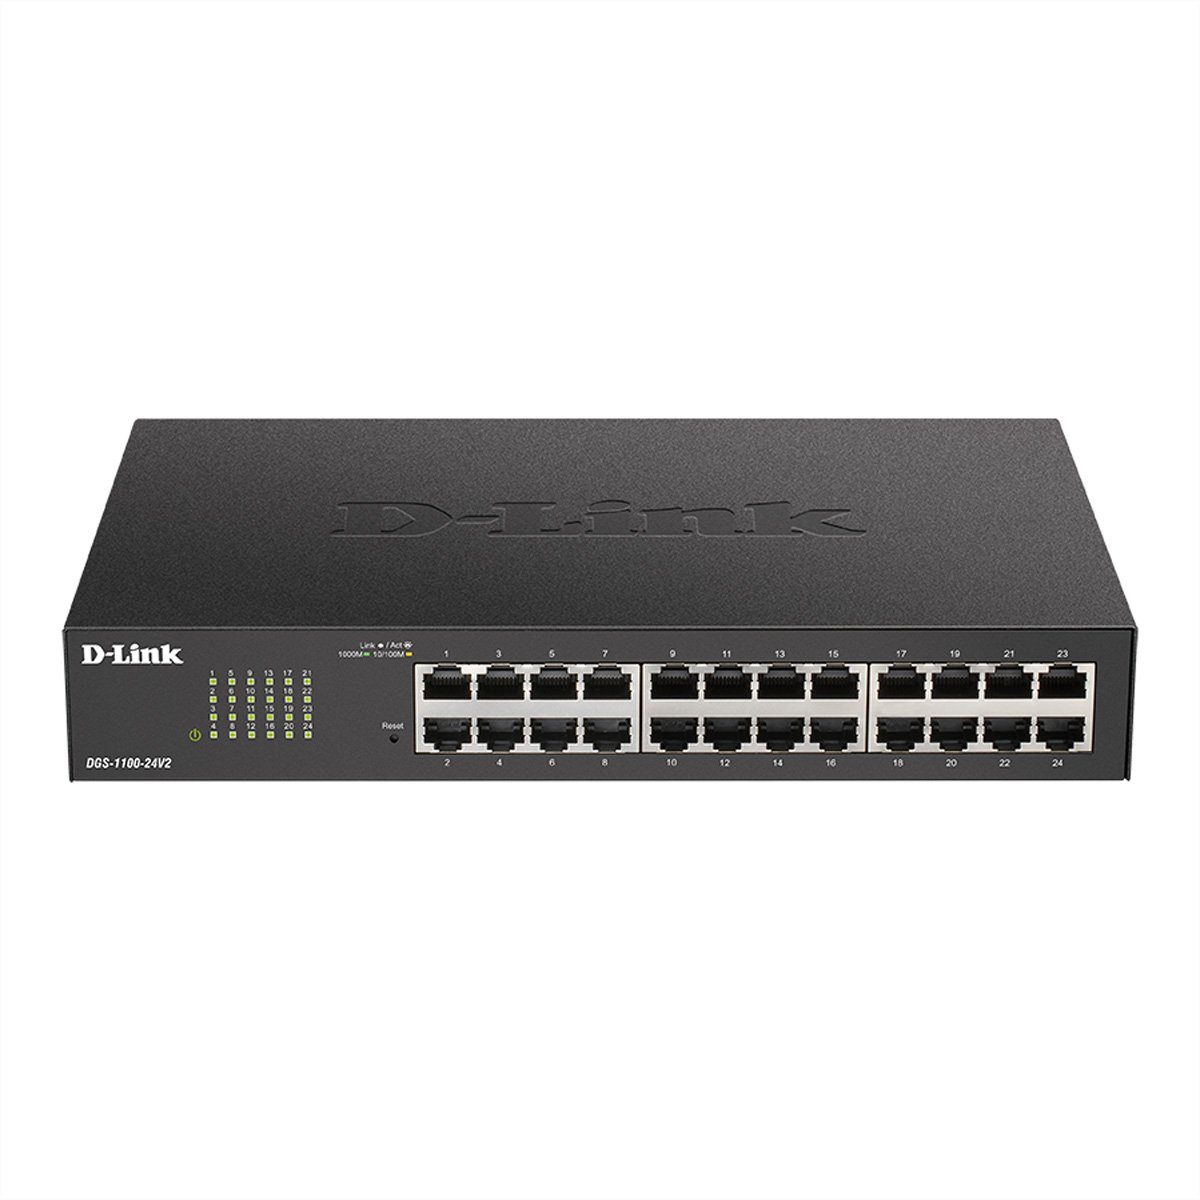 D-Link DGS-1100-24V2 24-Port Switch Netzwerk-Switch